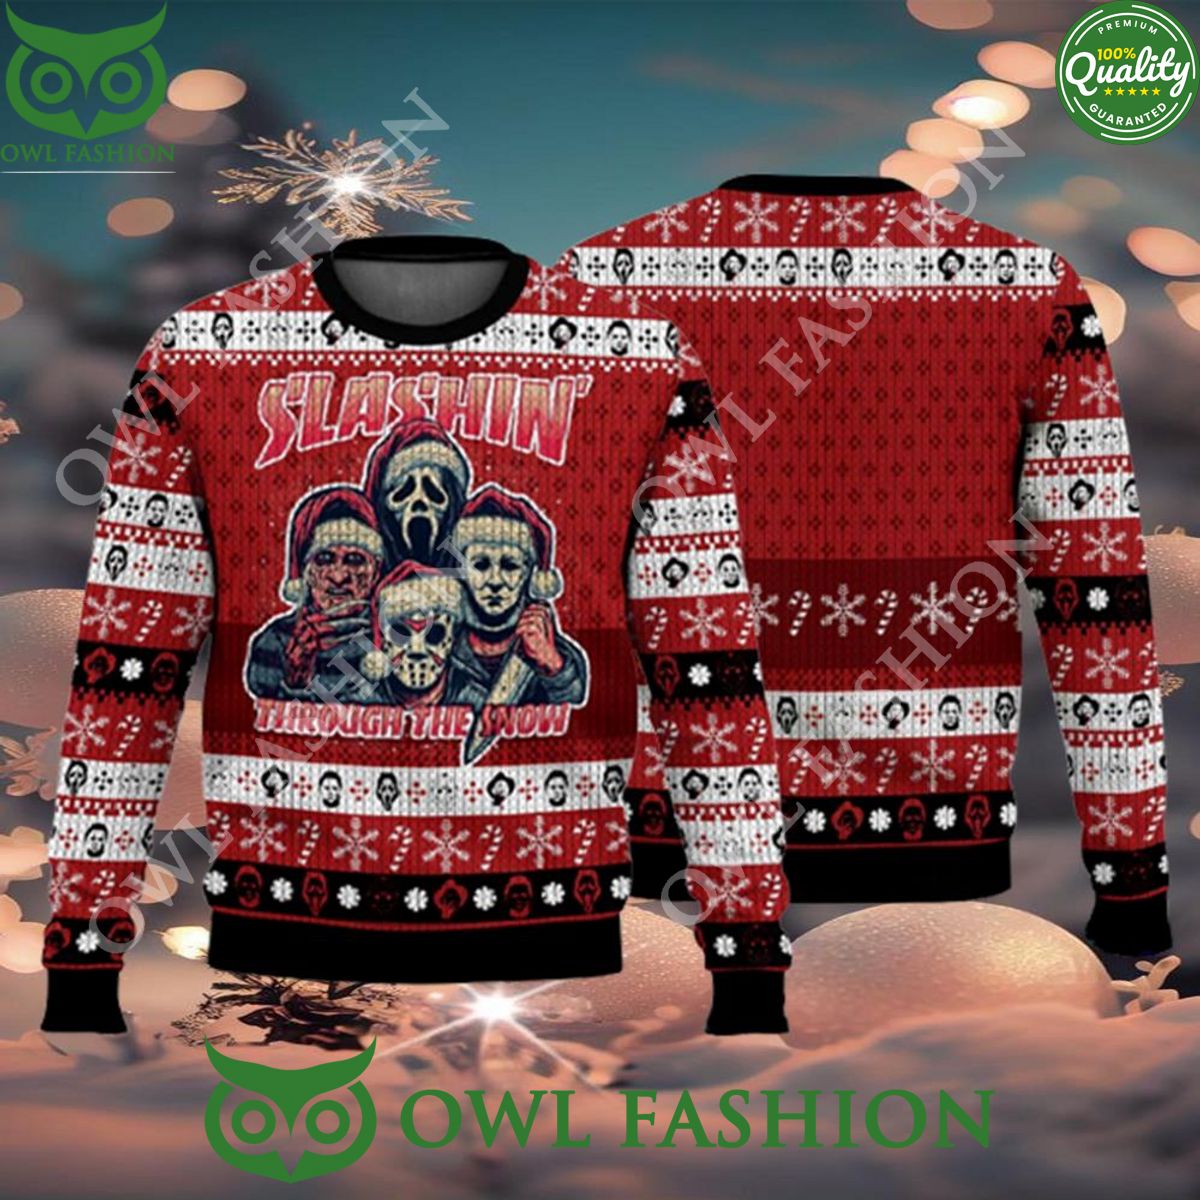 Horror Guys Slashin Through The Snow Christmas Ugly Christmas Sweater Jumper